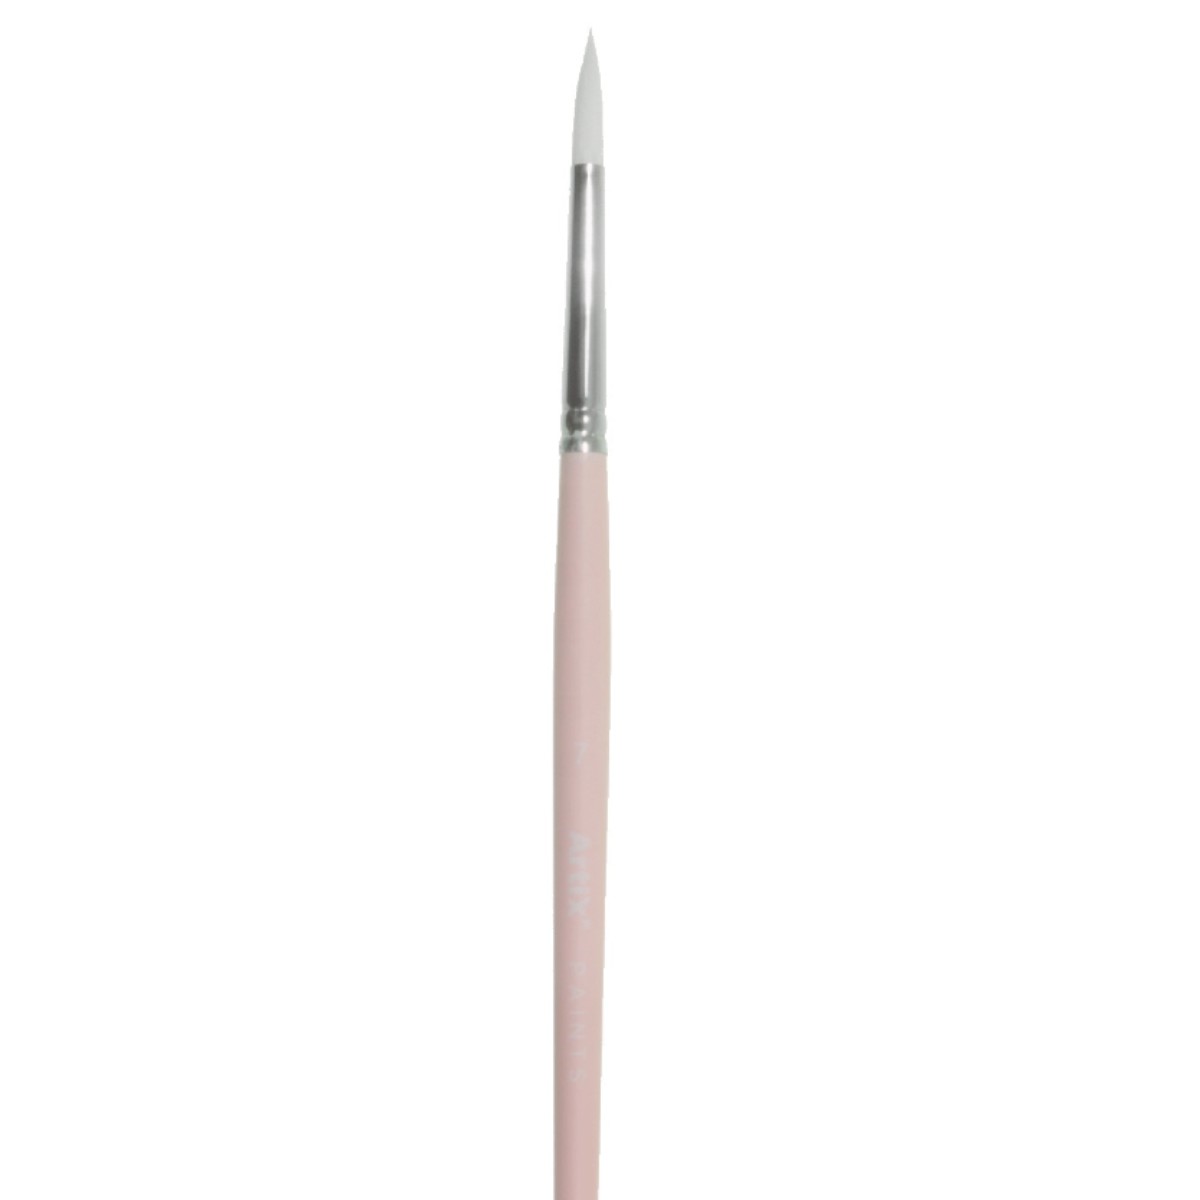 Pensula sintetica varf rotund coada scurta Artix nr 7 PP399-02